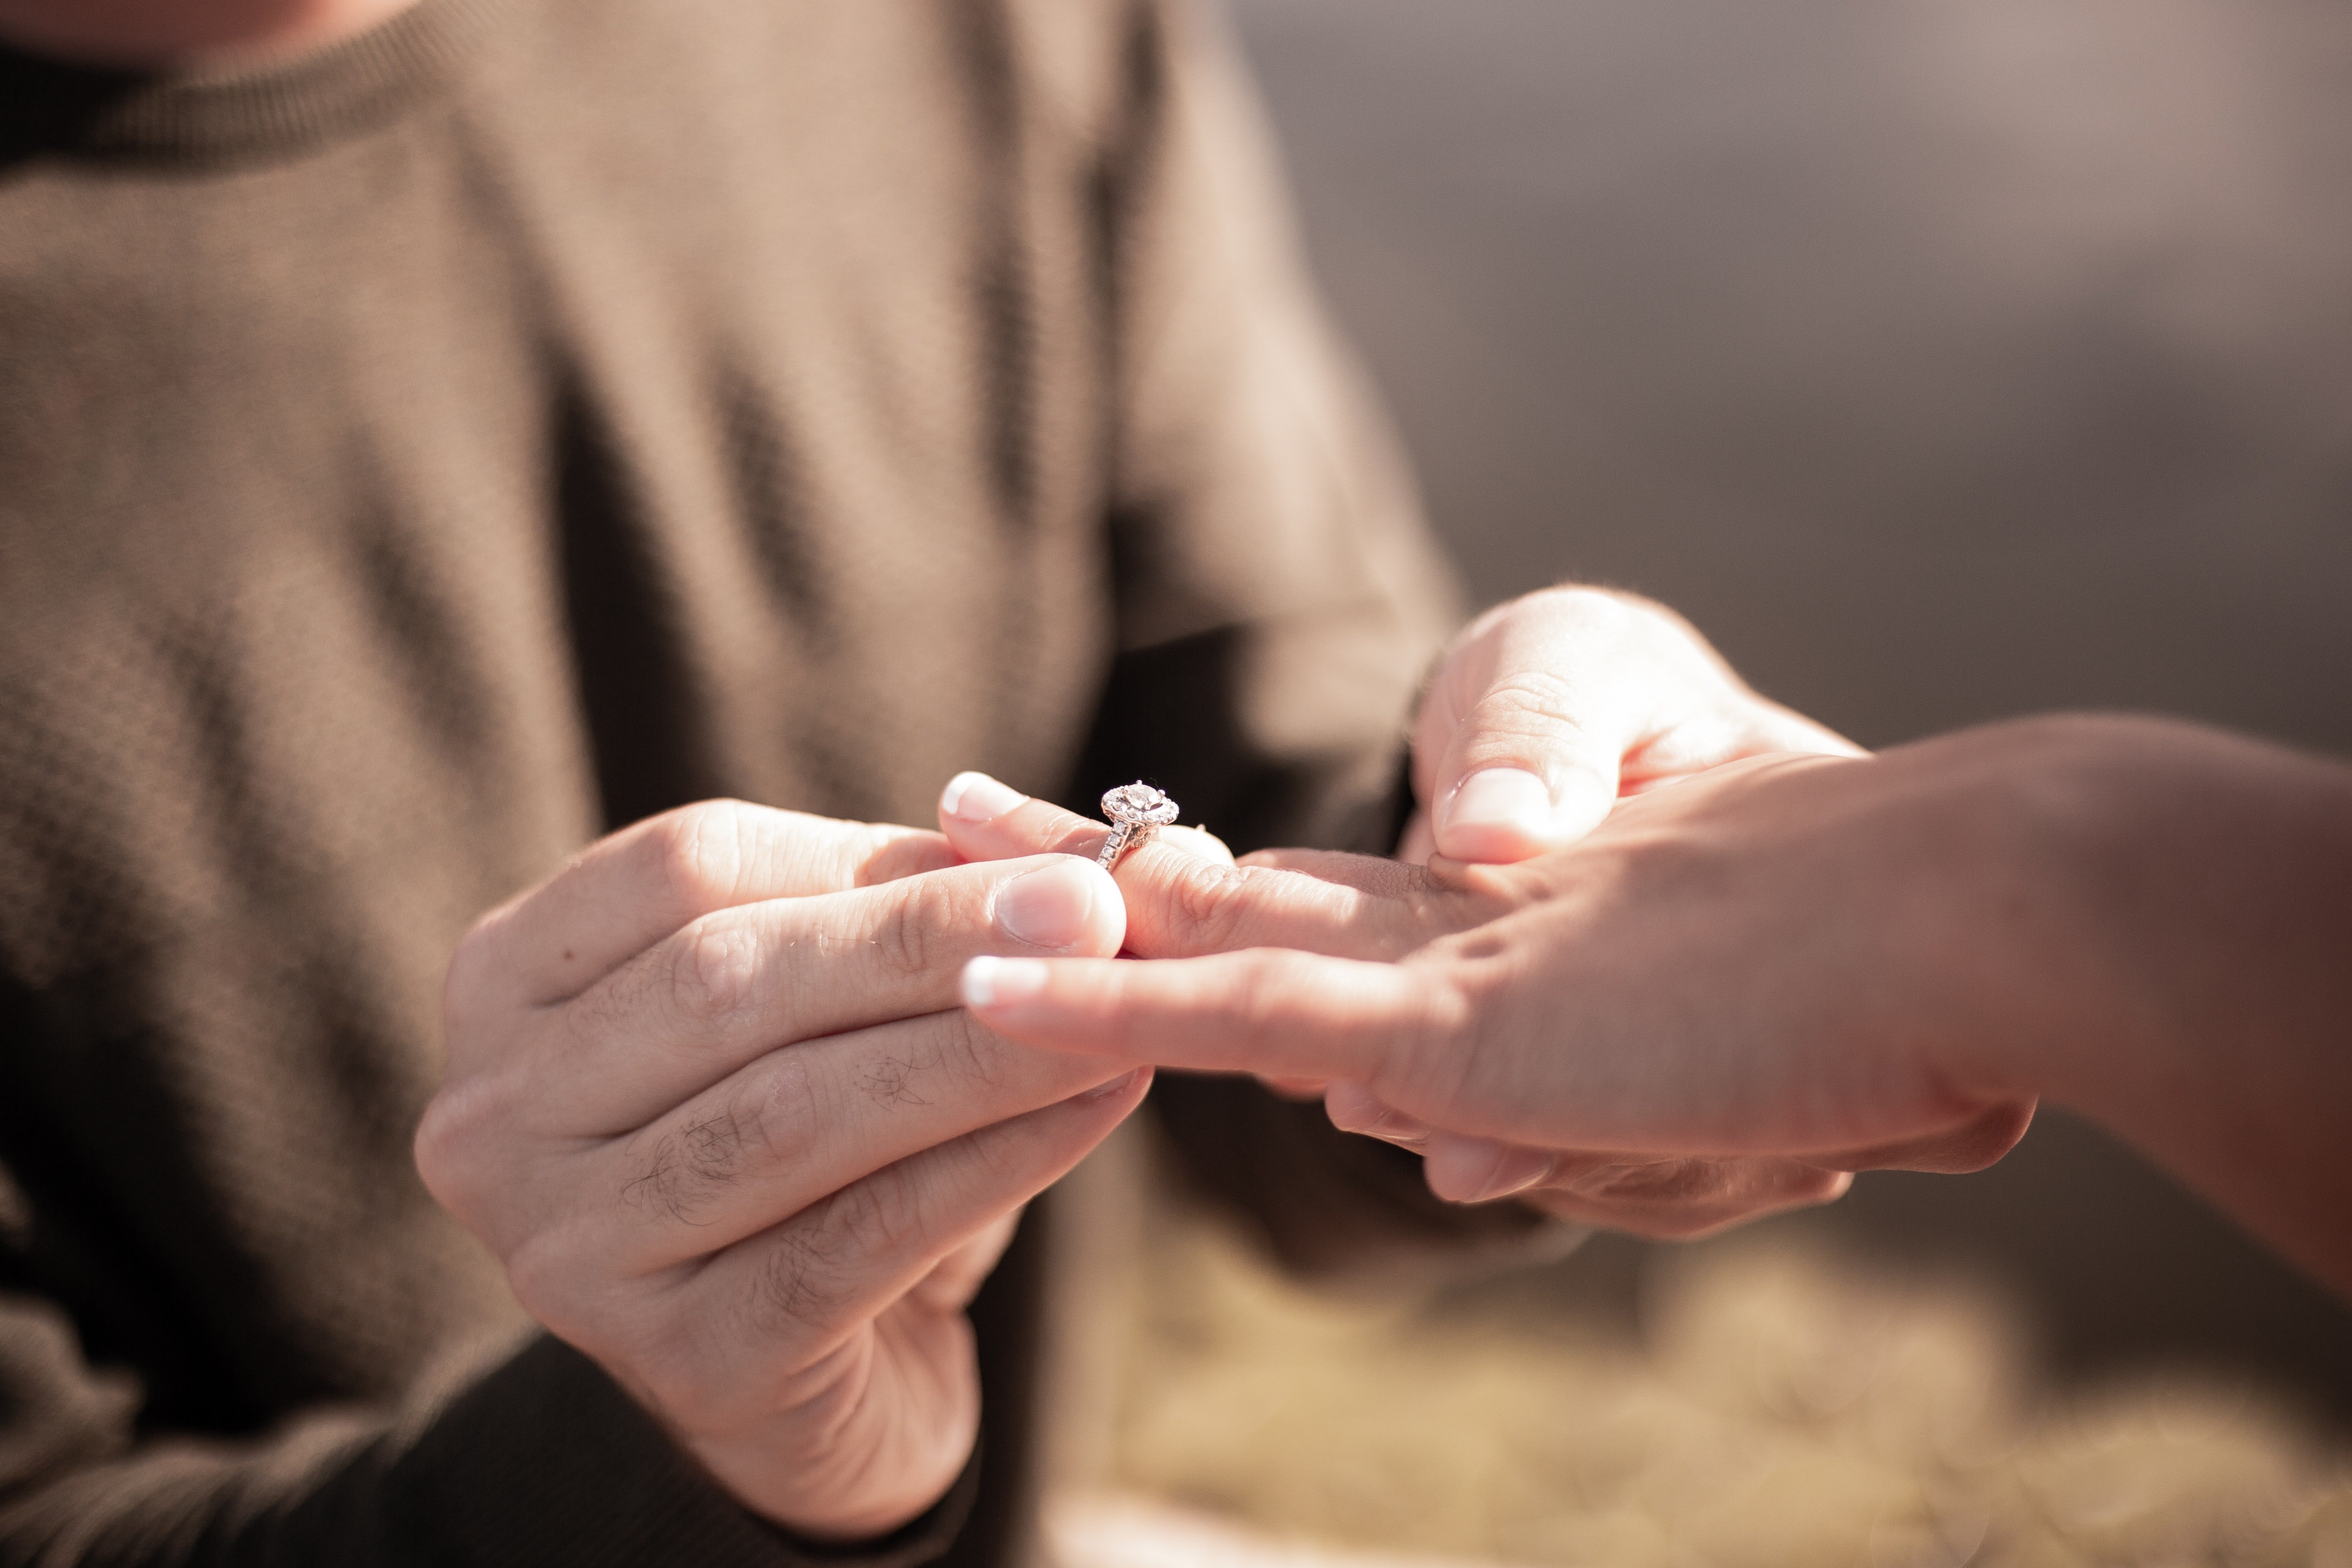 Man slips a wedding ring onto his fiancée's finger | Photo: Unsplash